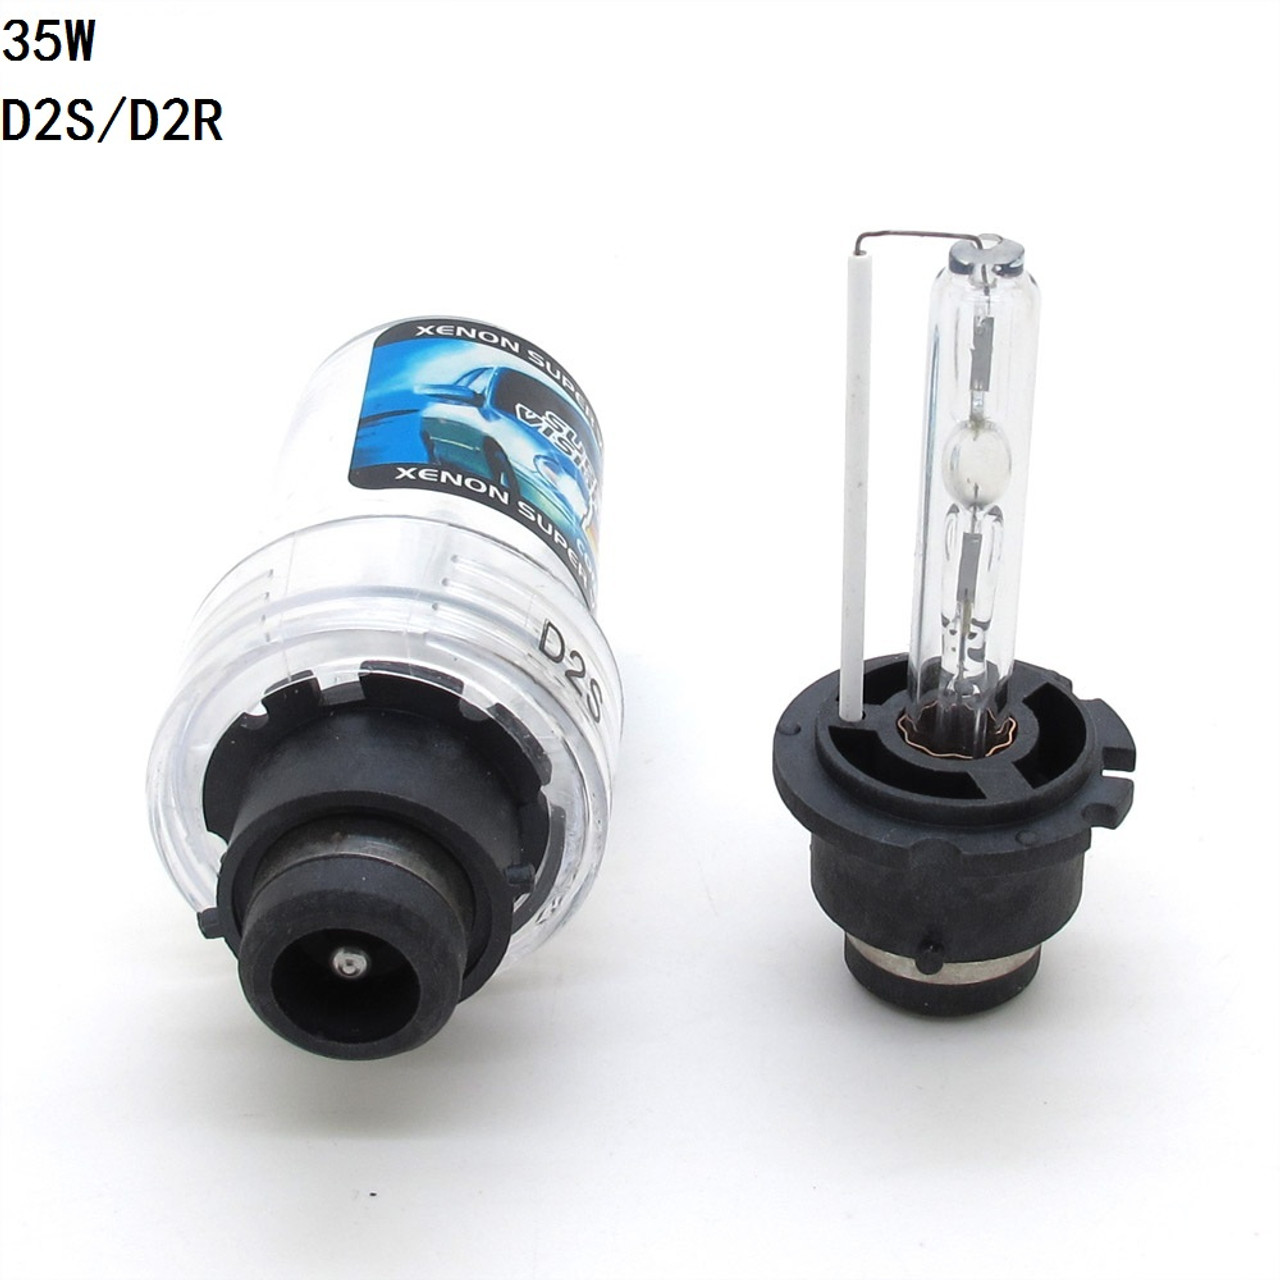 D2S Xenon Headlight Bulbs (Pair)